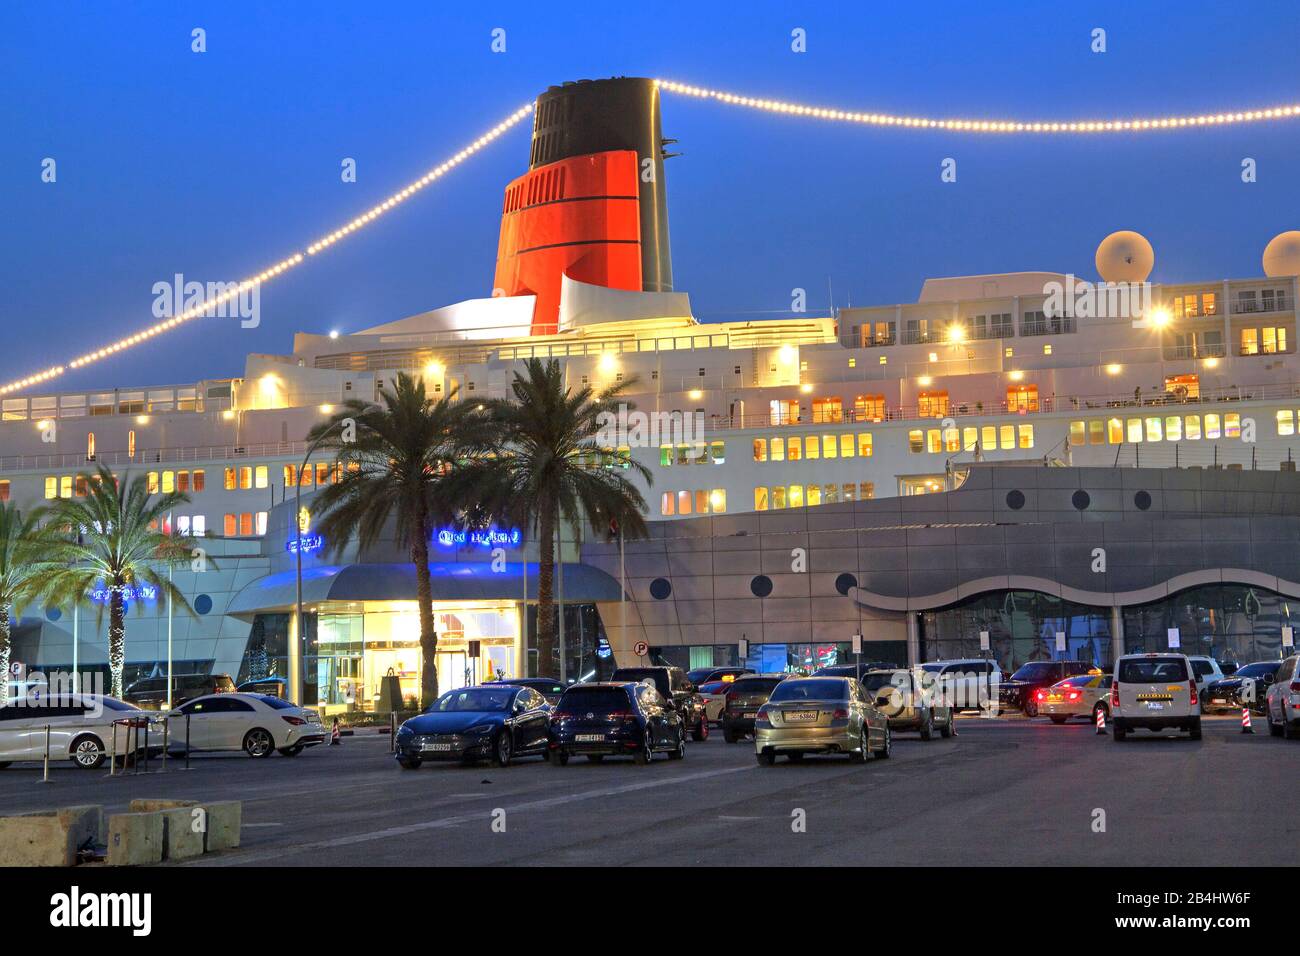 Hotel iluminado y barco museo Reina Isabel 2 (QE2) en el muelle al atardecer, Dubai, Golfo Pérsico, Emiratos Árabes Unidos Foto de stock